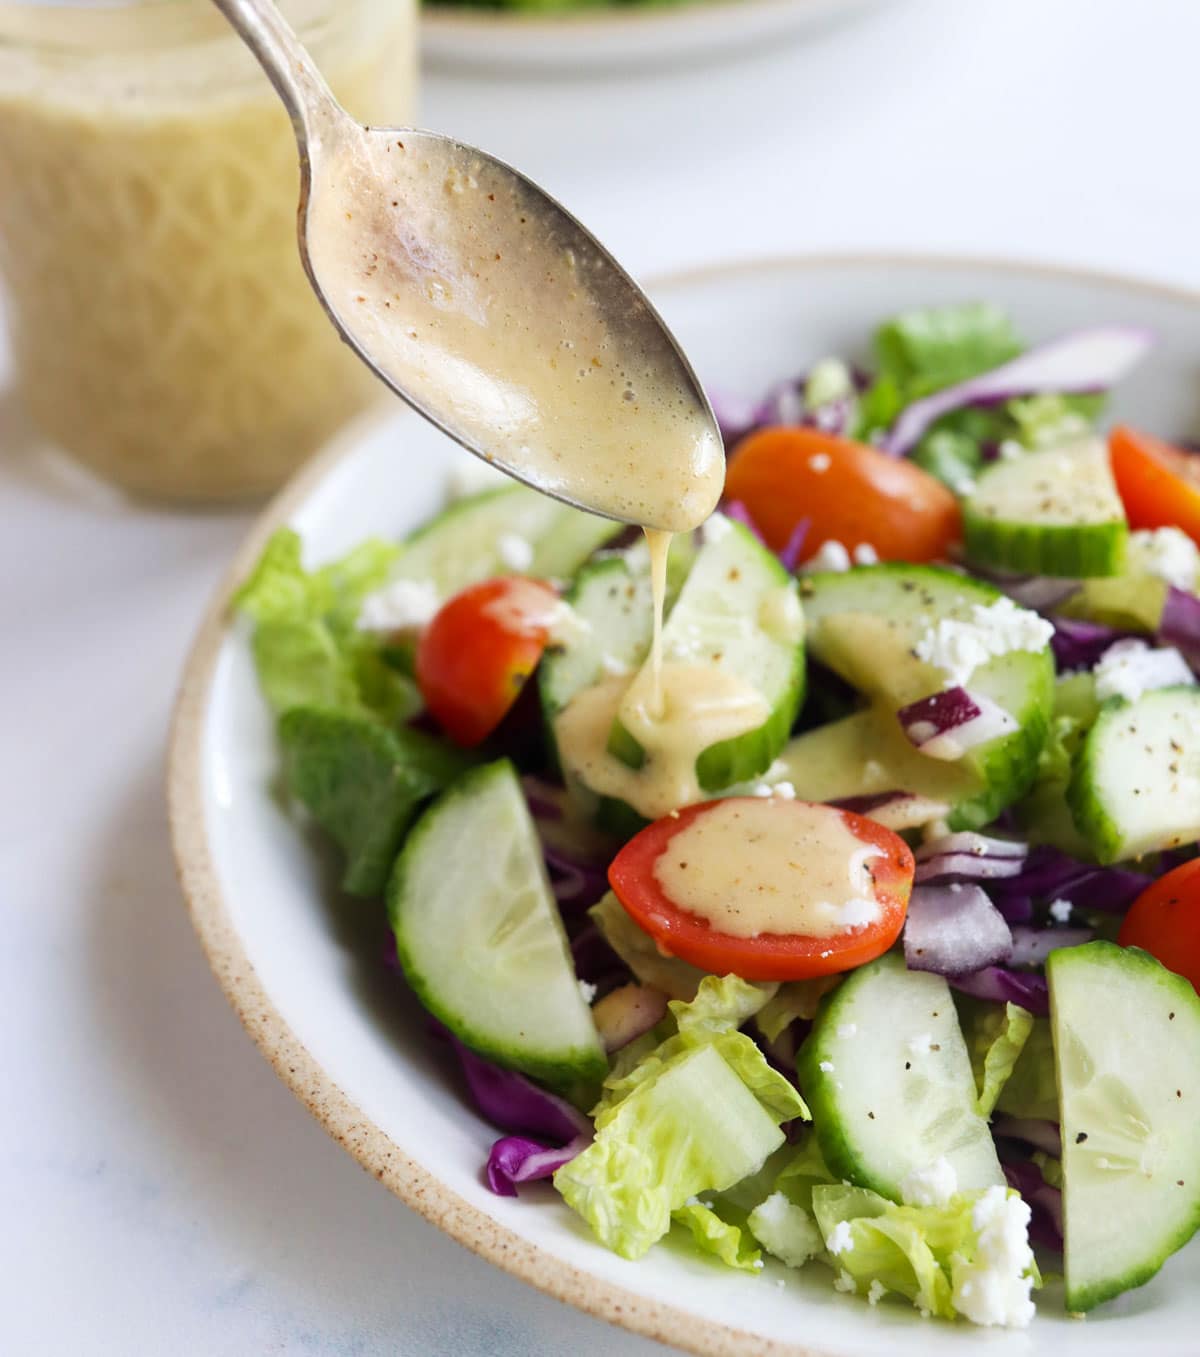 salad dressing on spoon over salad